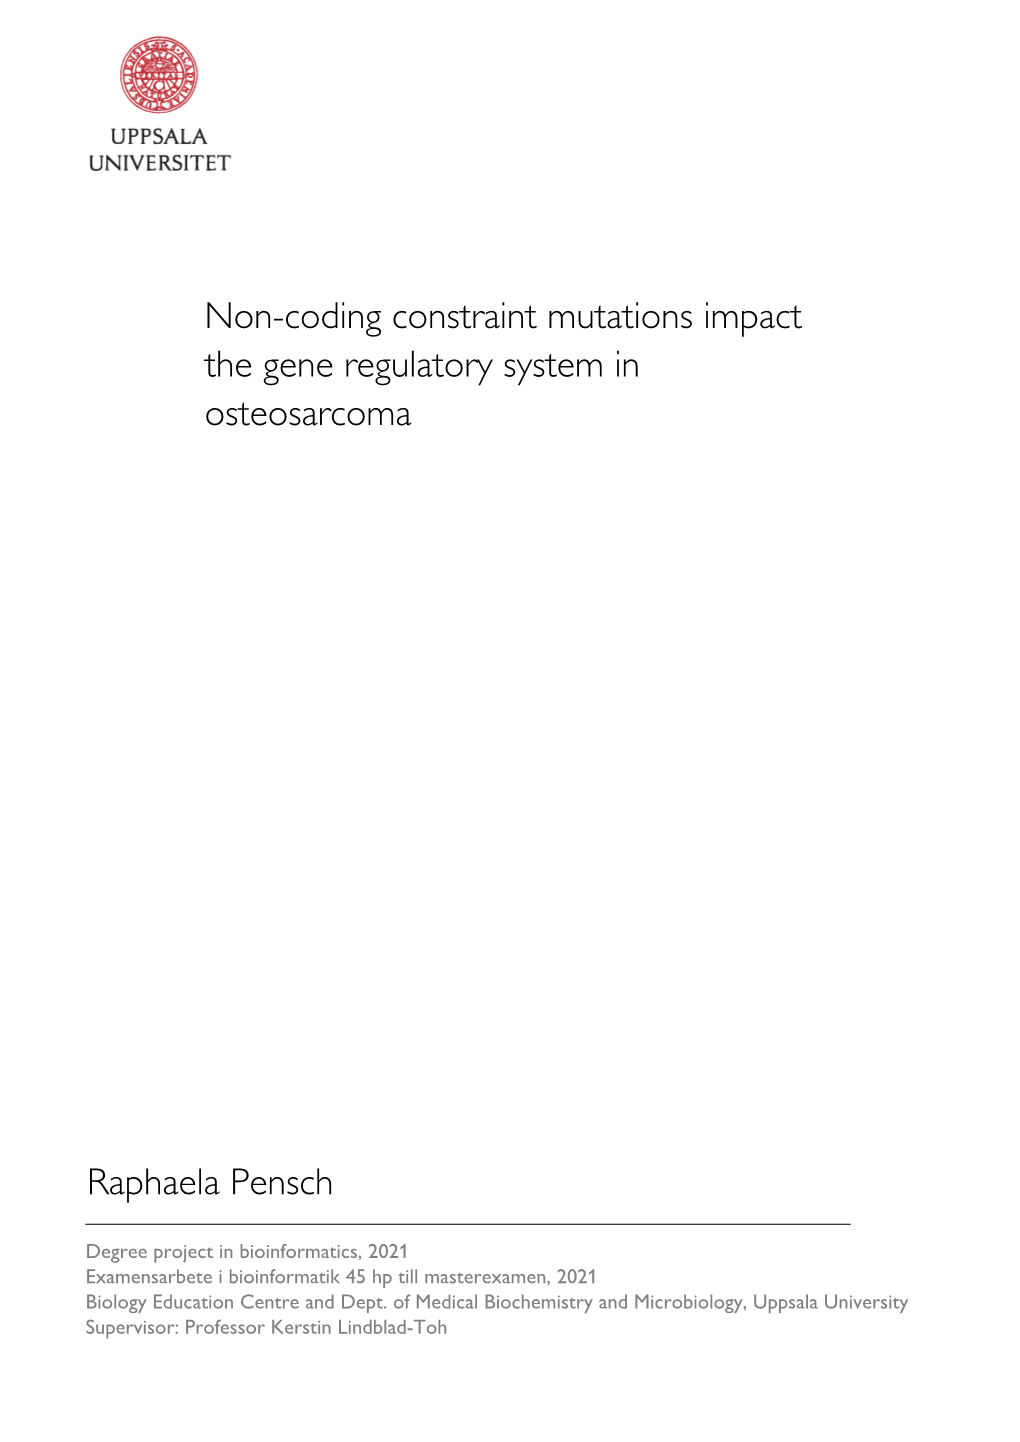 Non-Coding Constraint Mutations Impact the Gene Regulatory System in Osteosarcoma